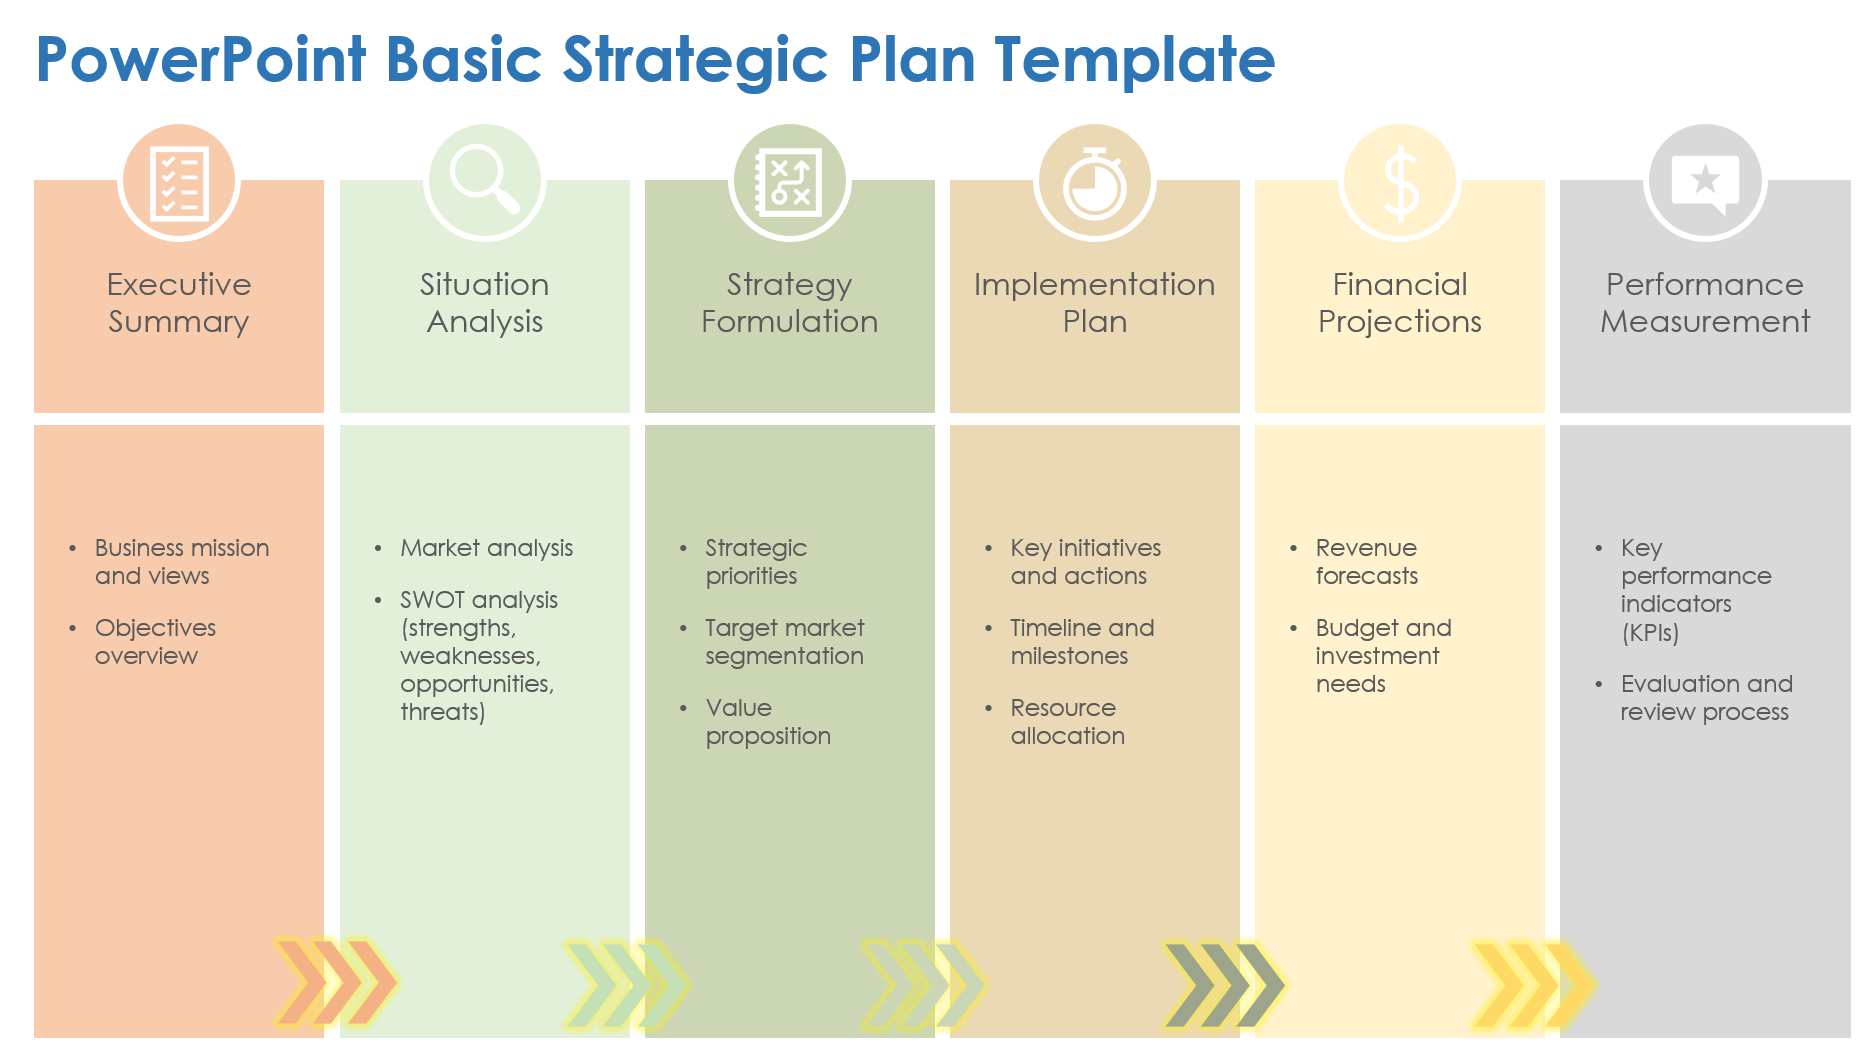 PowerPoint Basic Strategic Plan Template